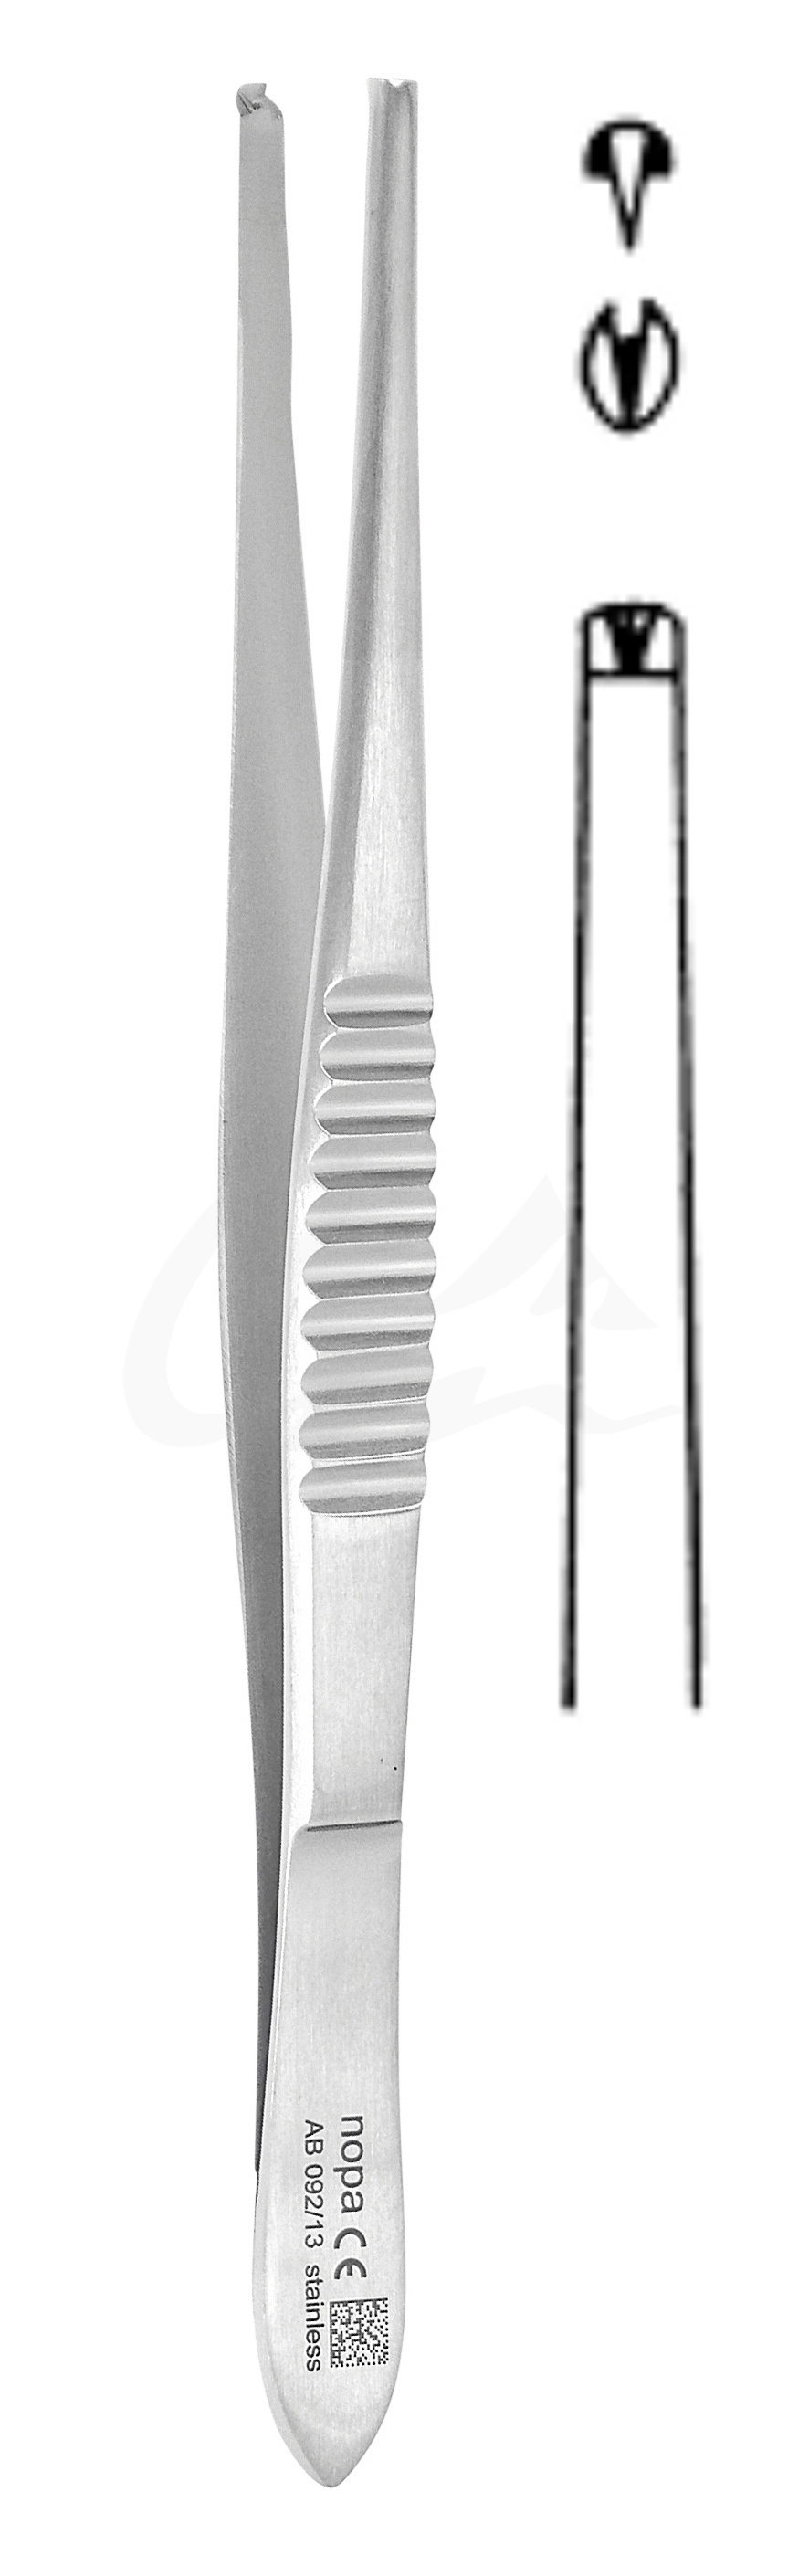 Nopa Modell USA Tissue Forcep 1x2 Teeth 13cm